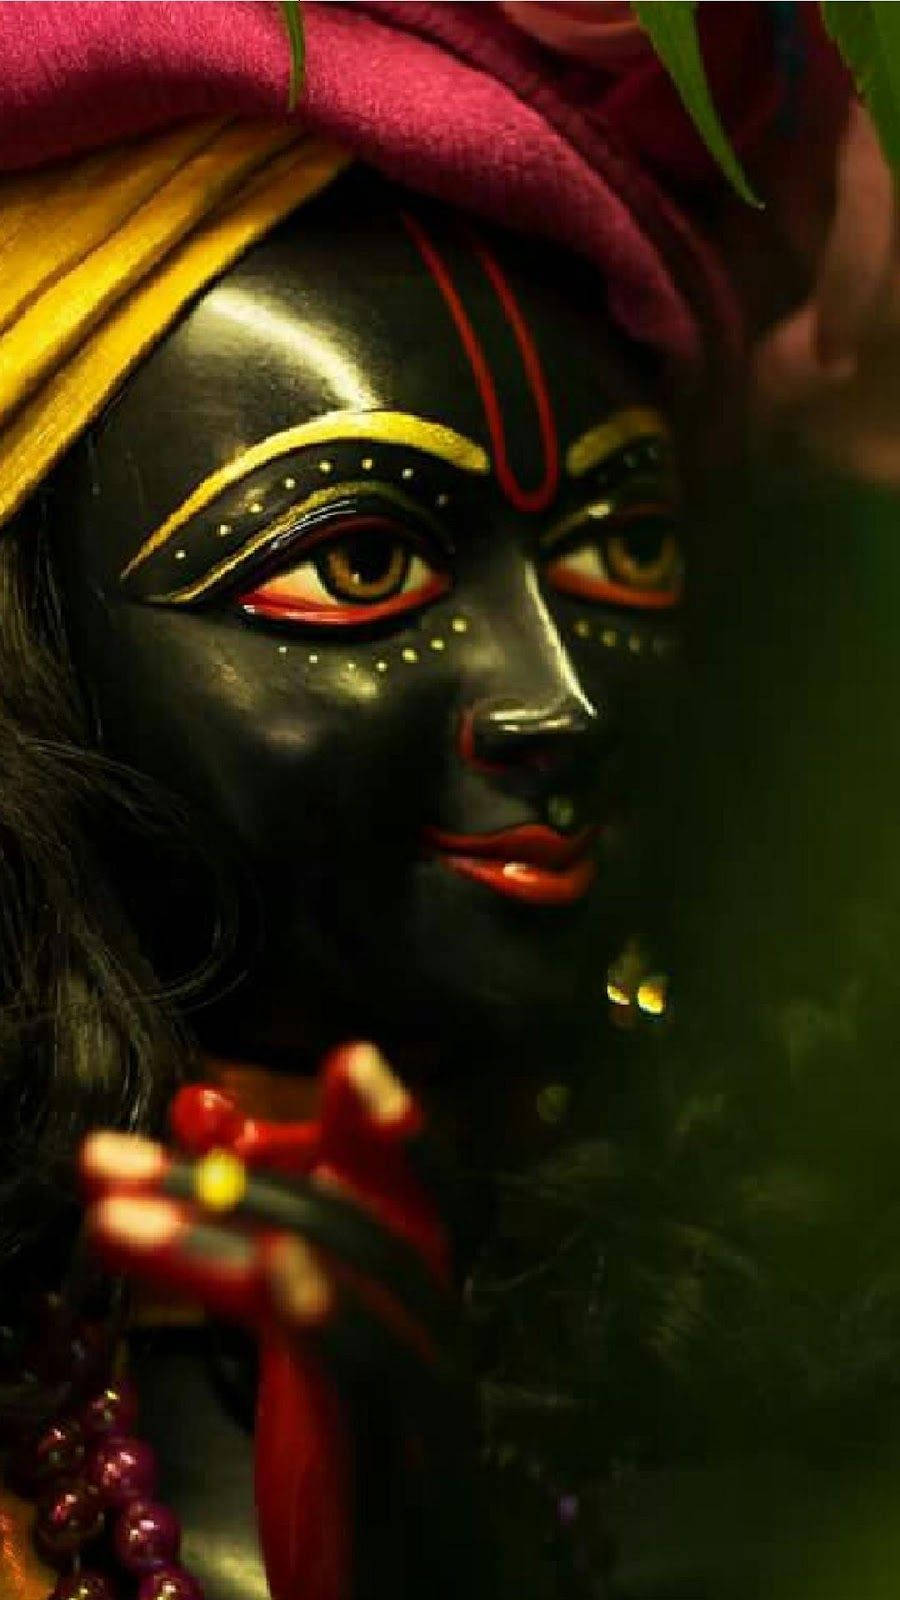 Majestic Black Krishna Statue Taken With Phone Camera